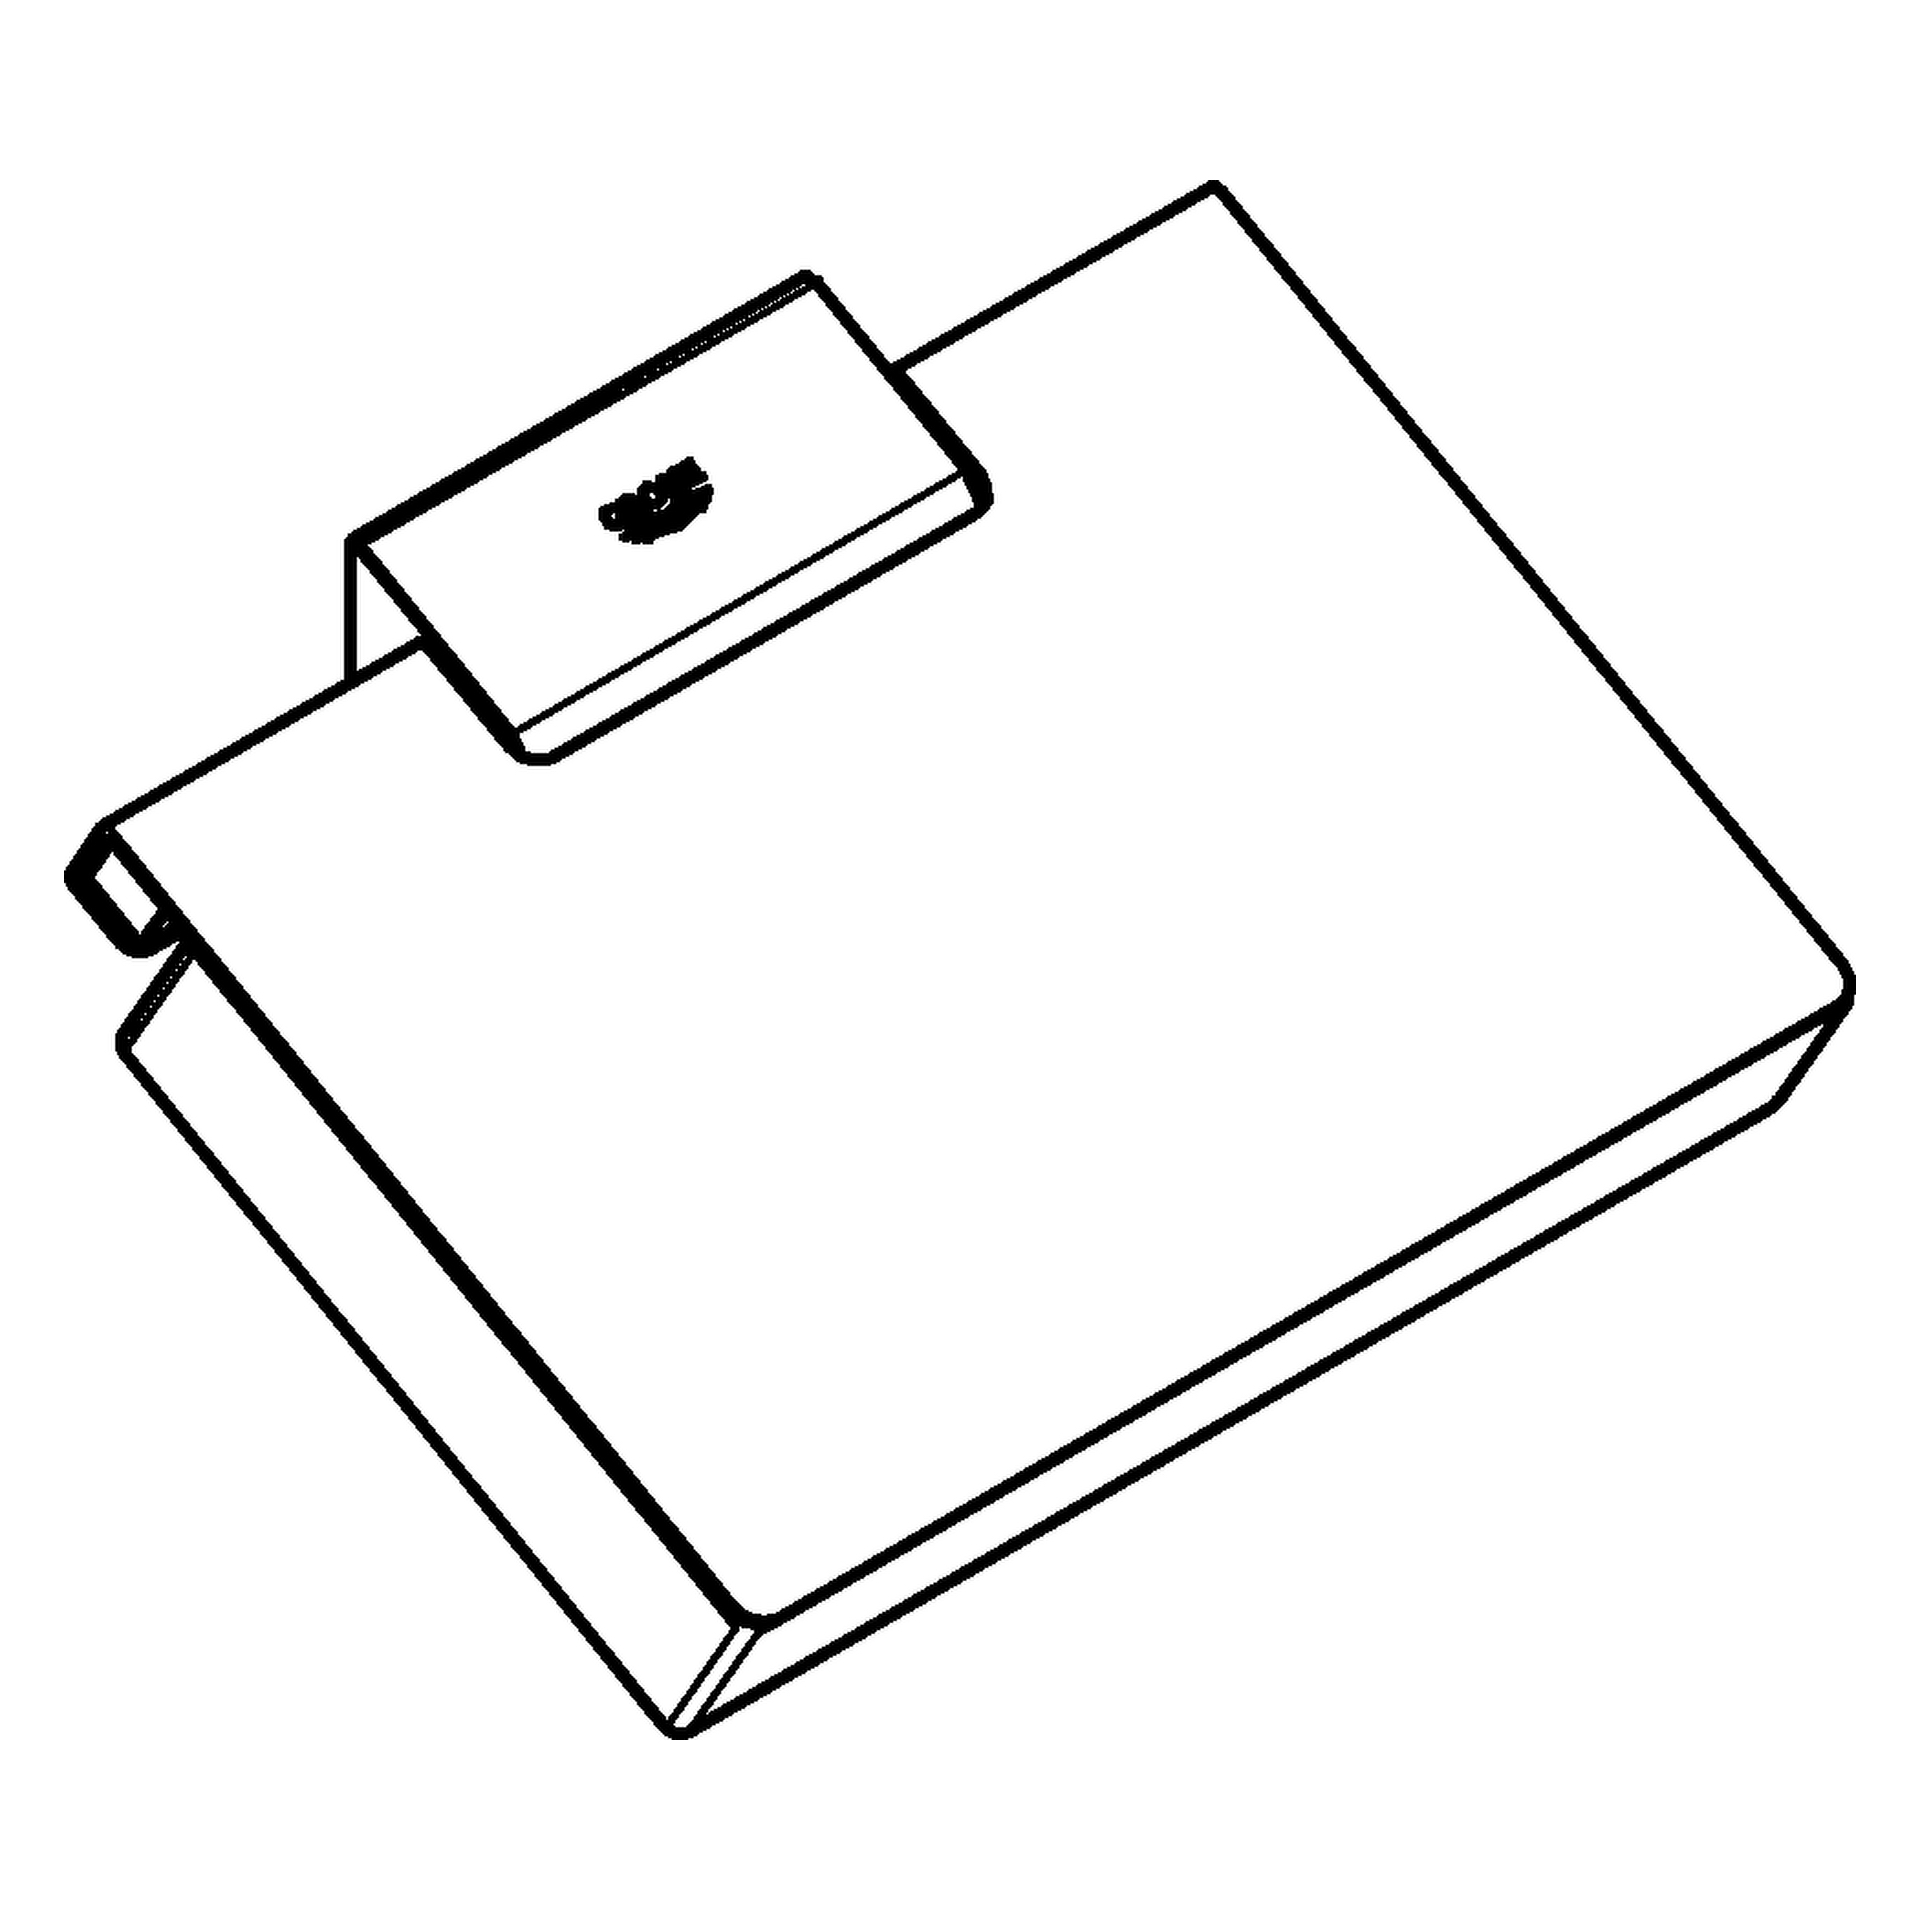 WC-Papierhalter Selection Cube 40781, mit Deckel, chrom